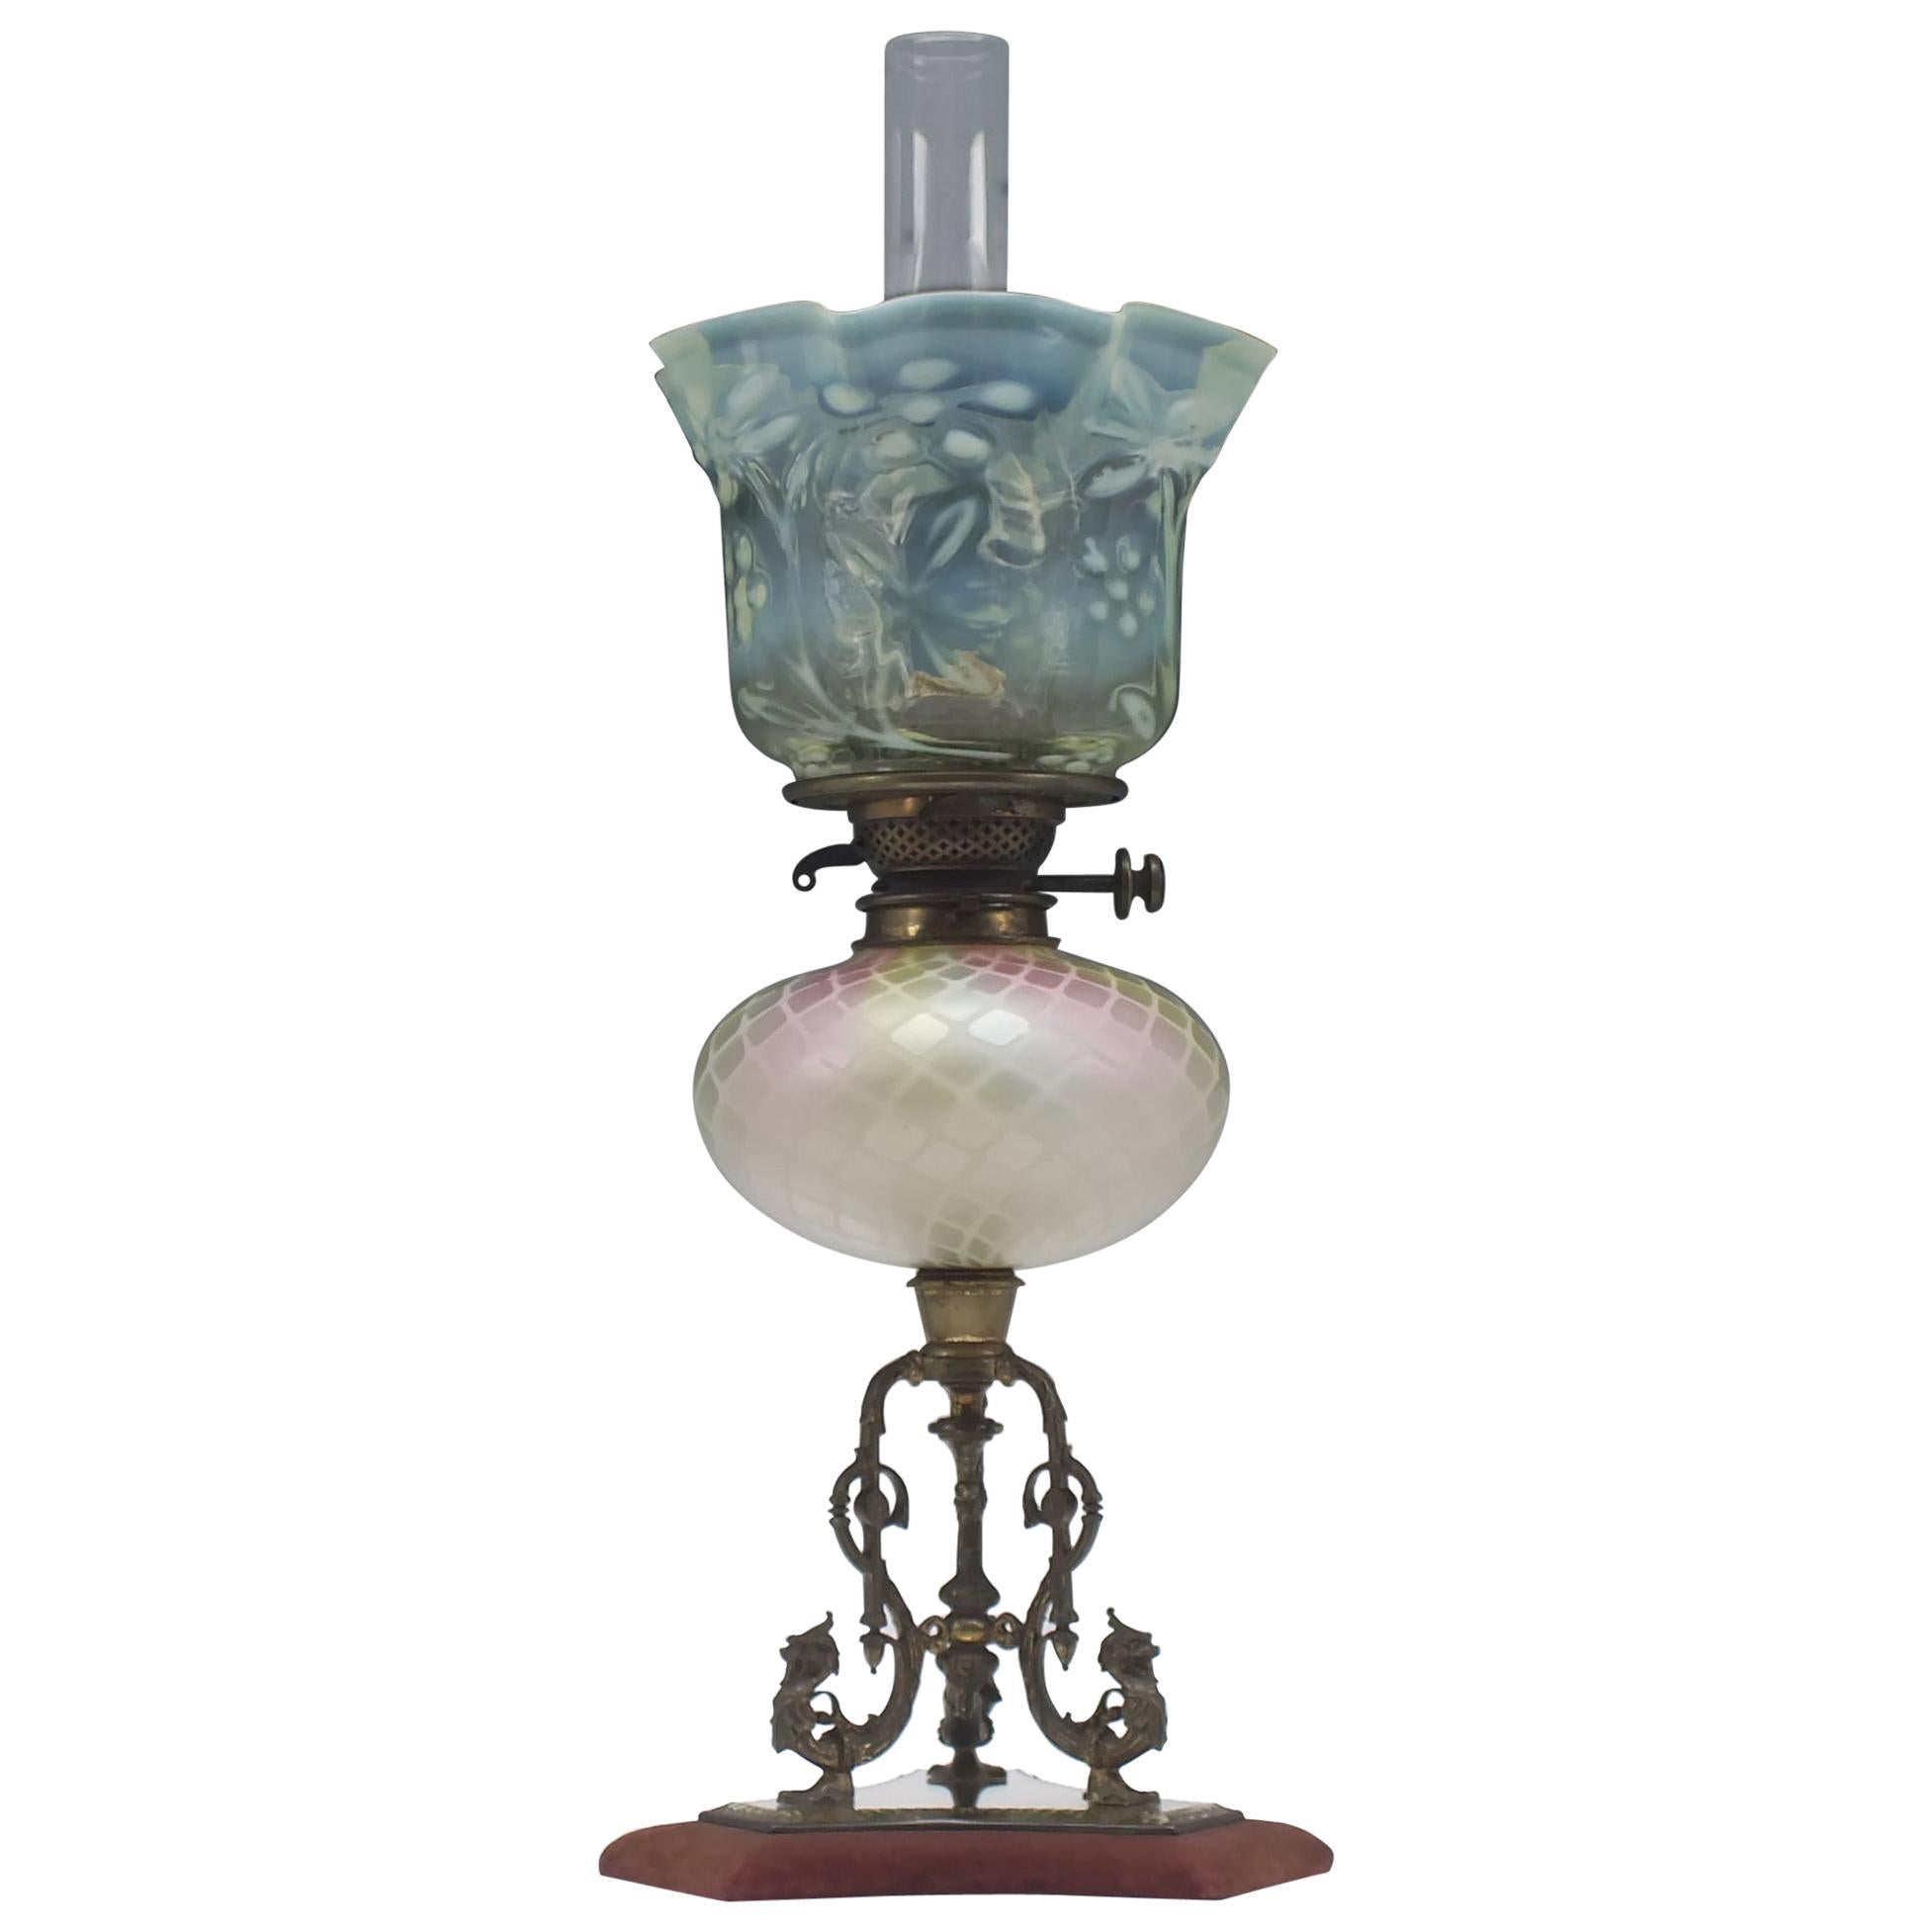 Large Victorian Stevens & Williams Duplex Oil Lamp, circa 1880